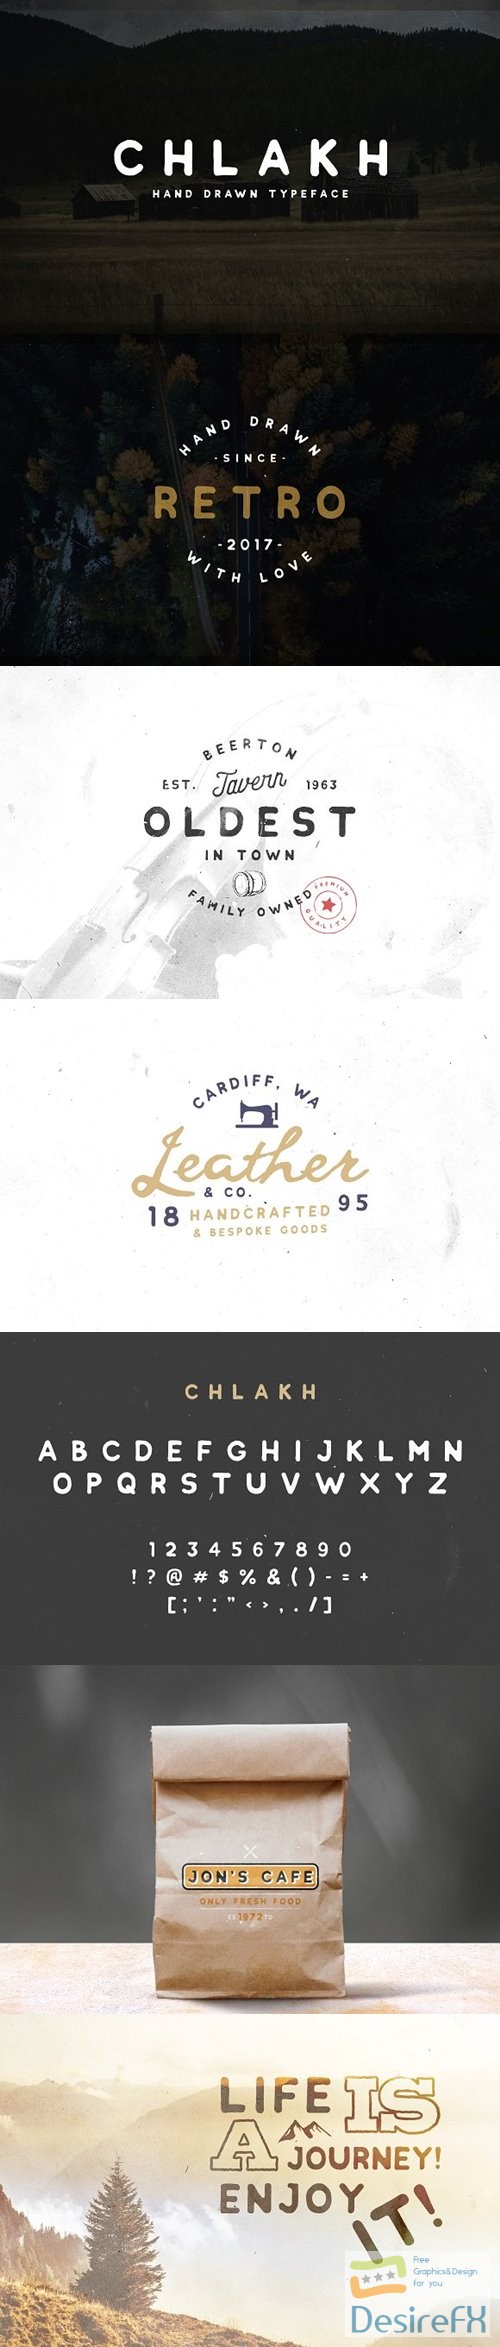 CM - Chlakh - hand drawn typeface 1590819